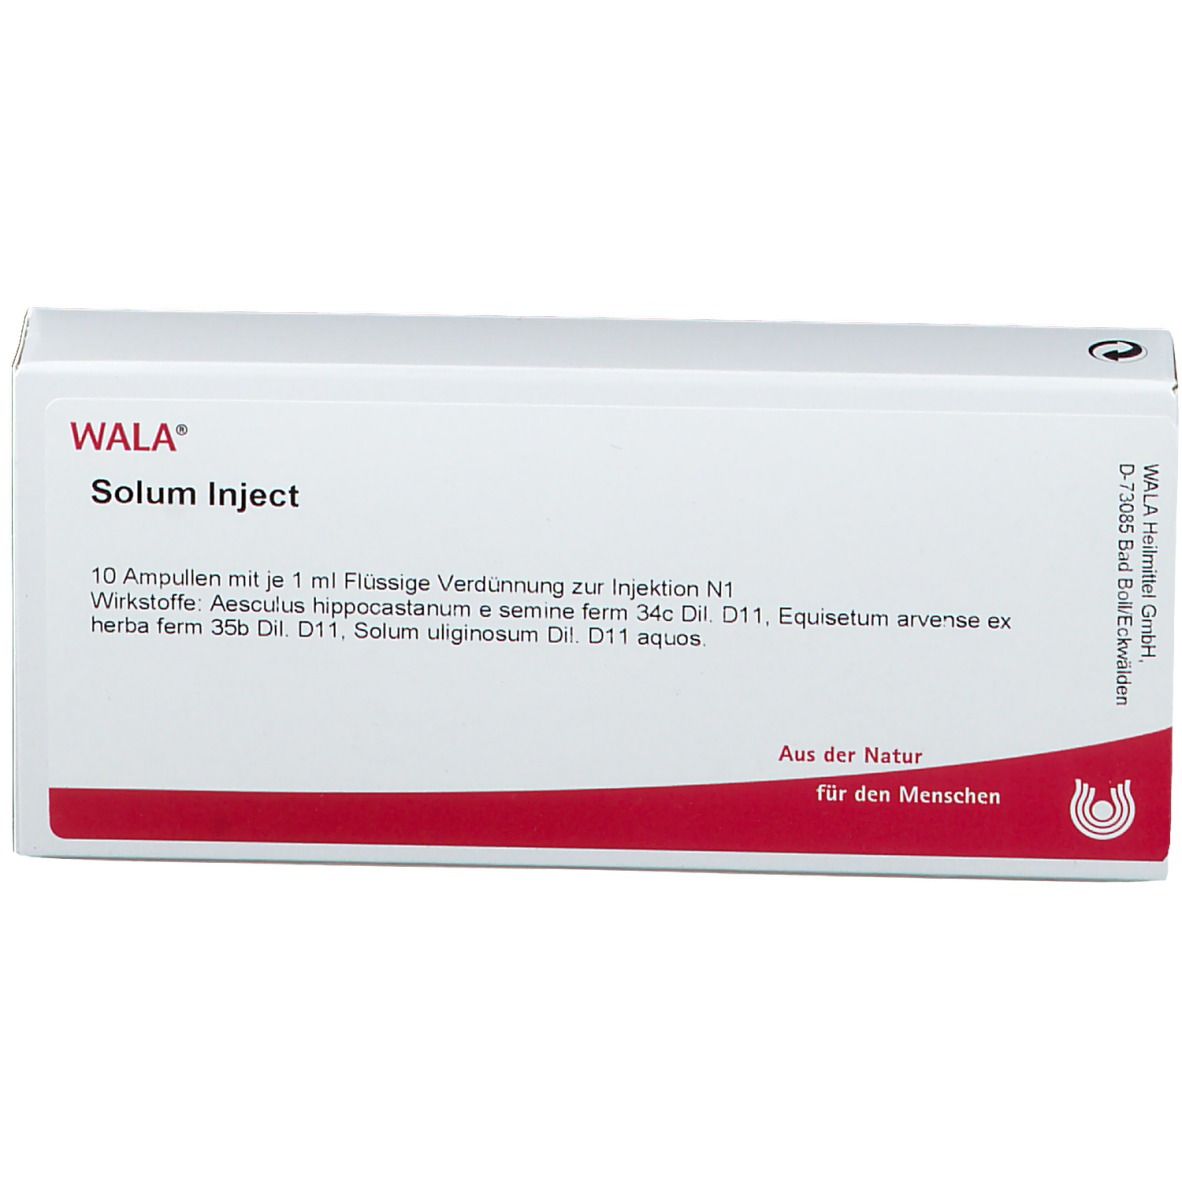 WALA® Solum Inject Amp.